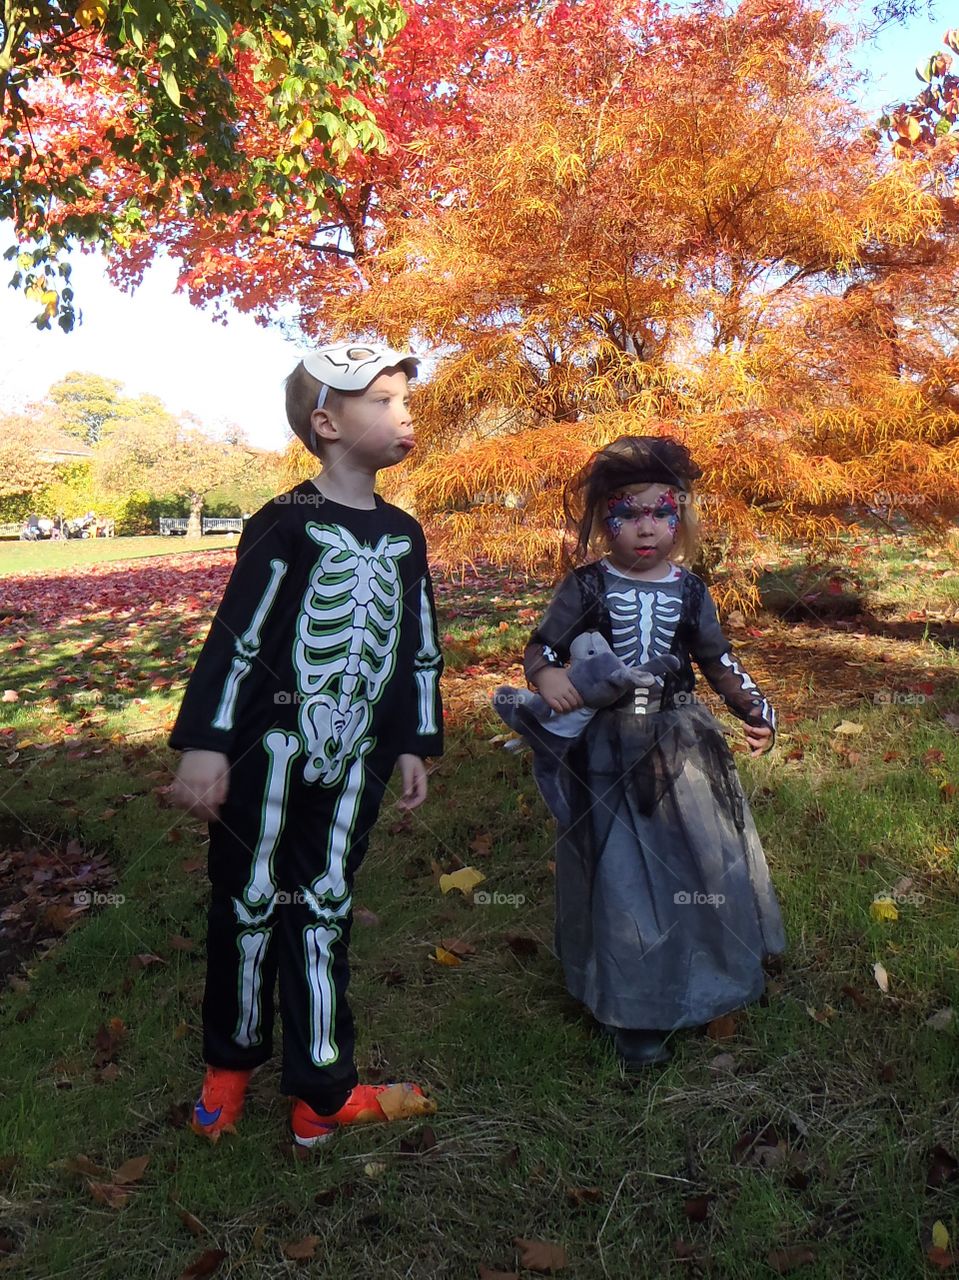 Children in Halloween costume in park during autumn